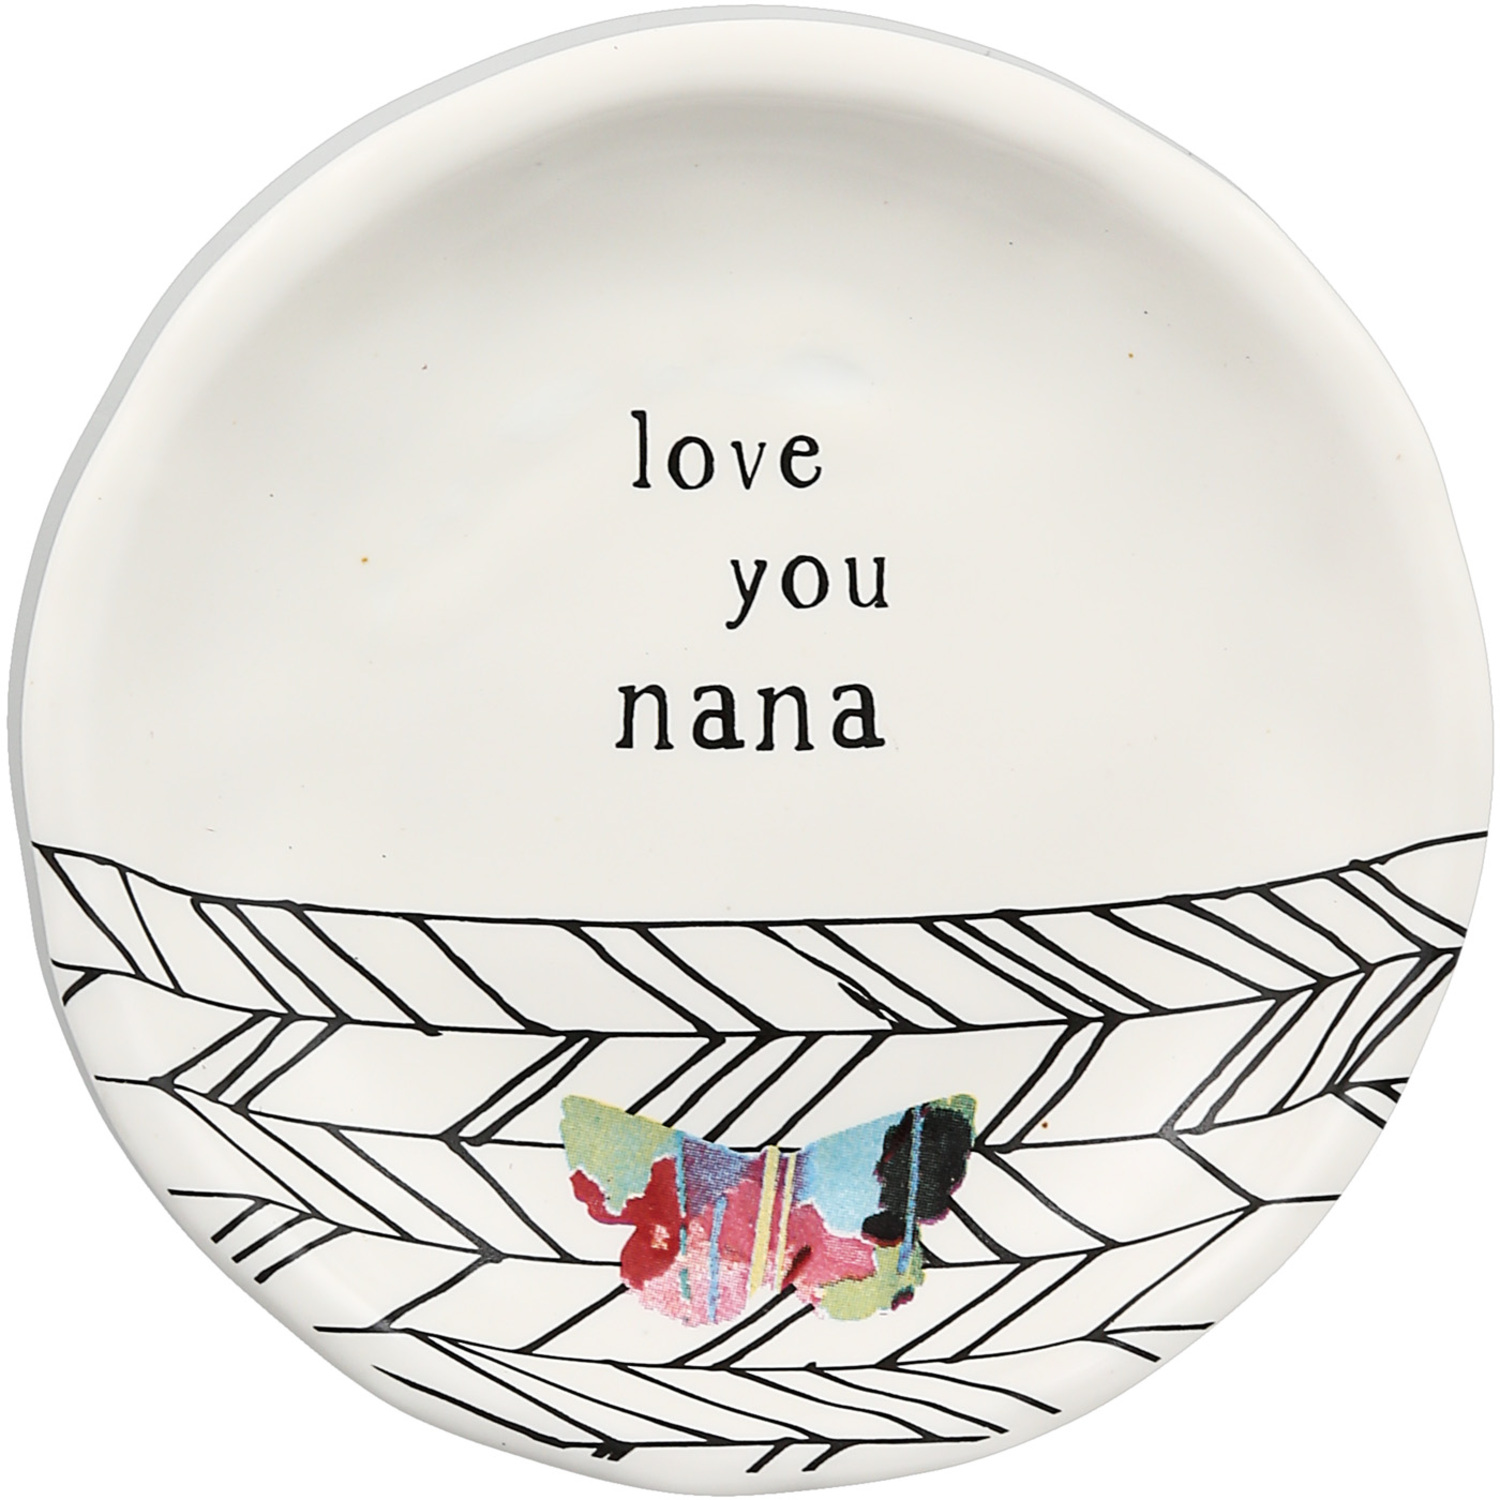 Nana by Celebrating You - Nana - 4" Keepsake Dish